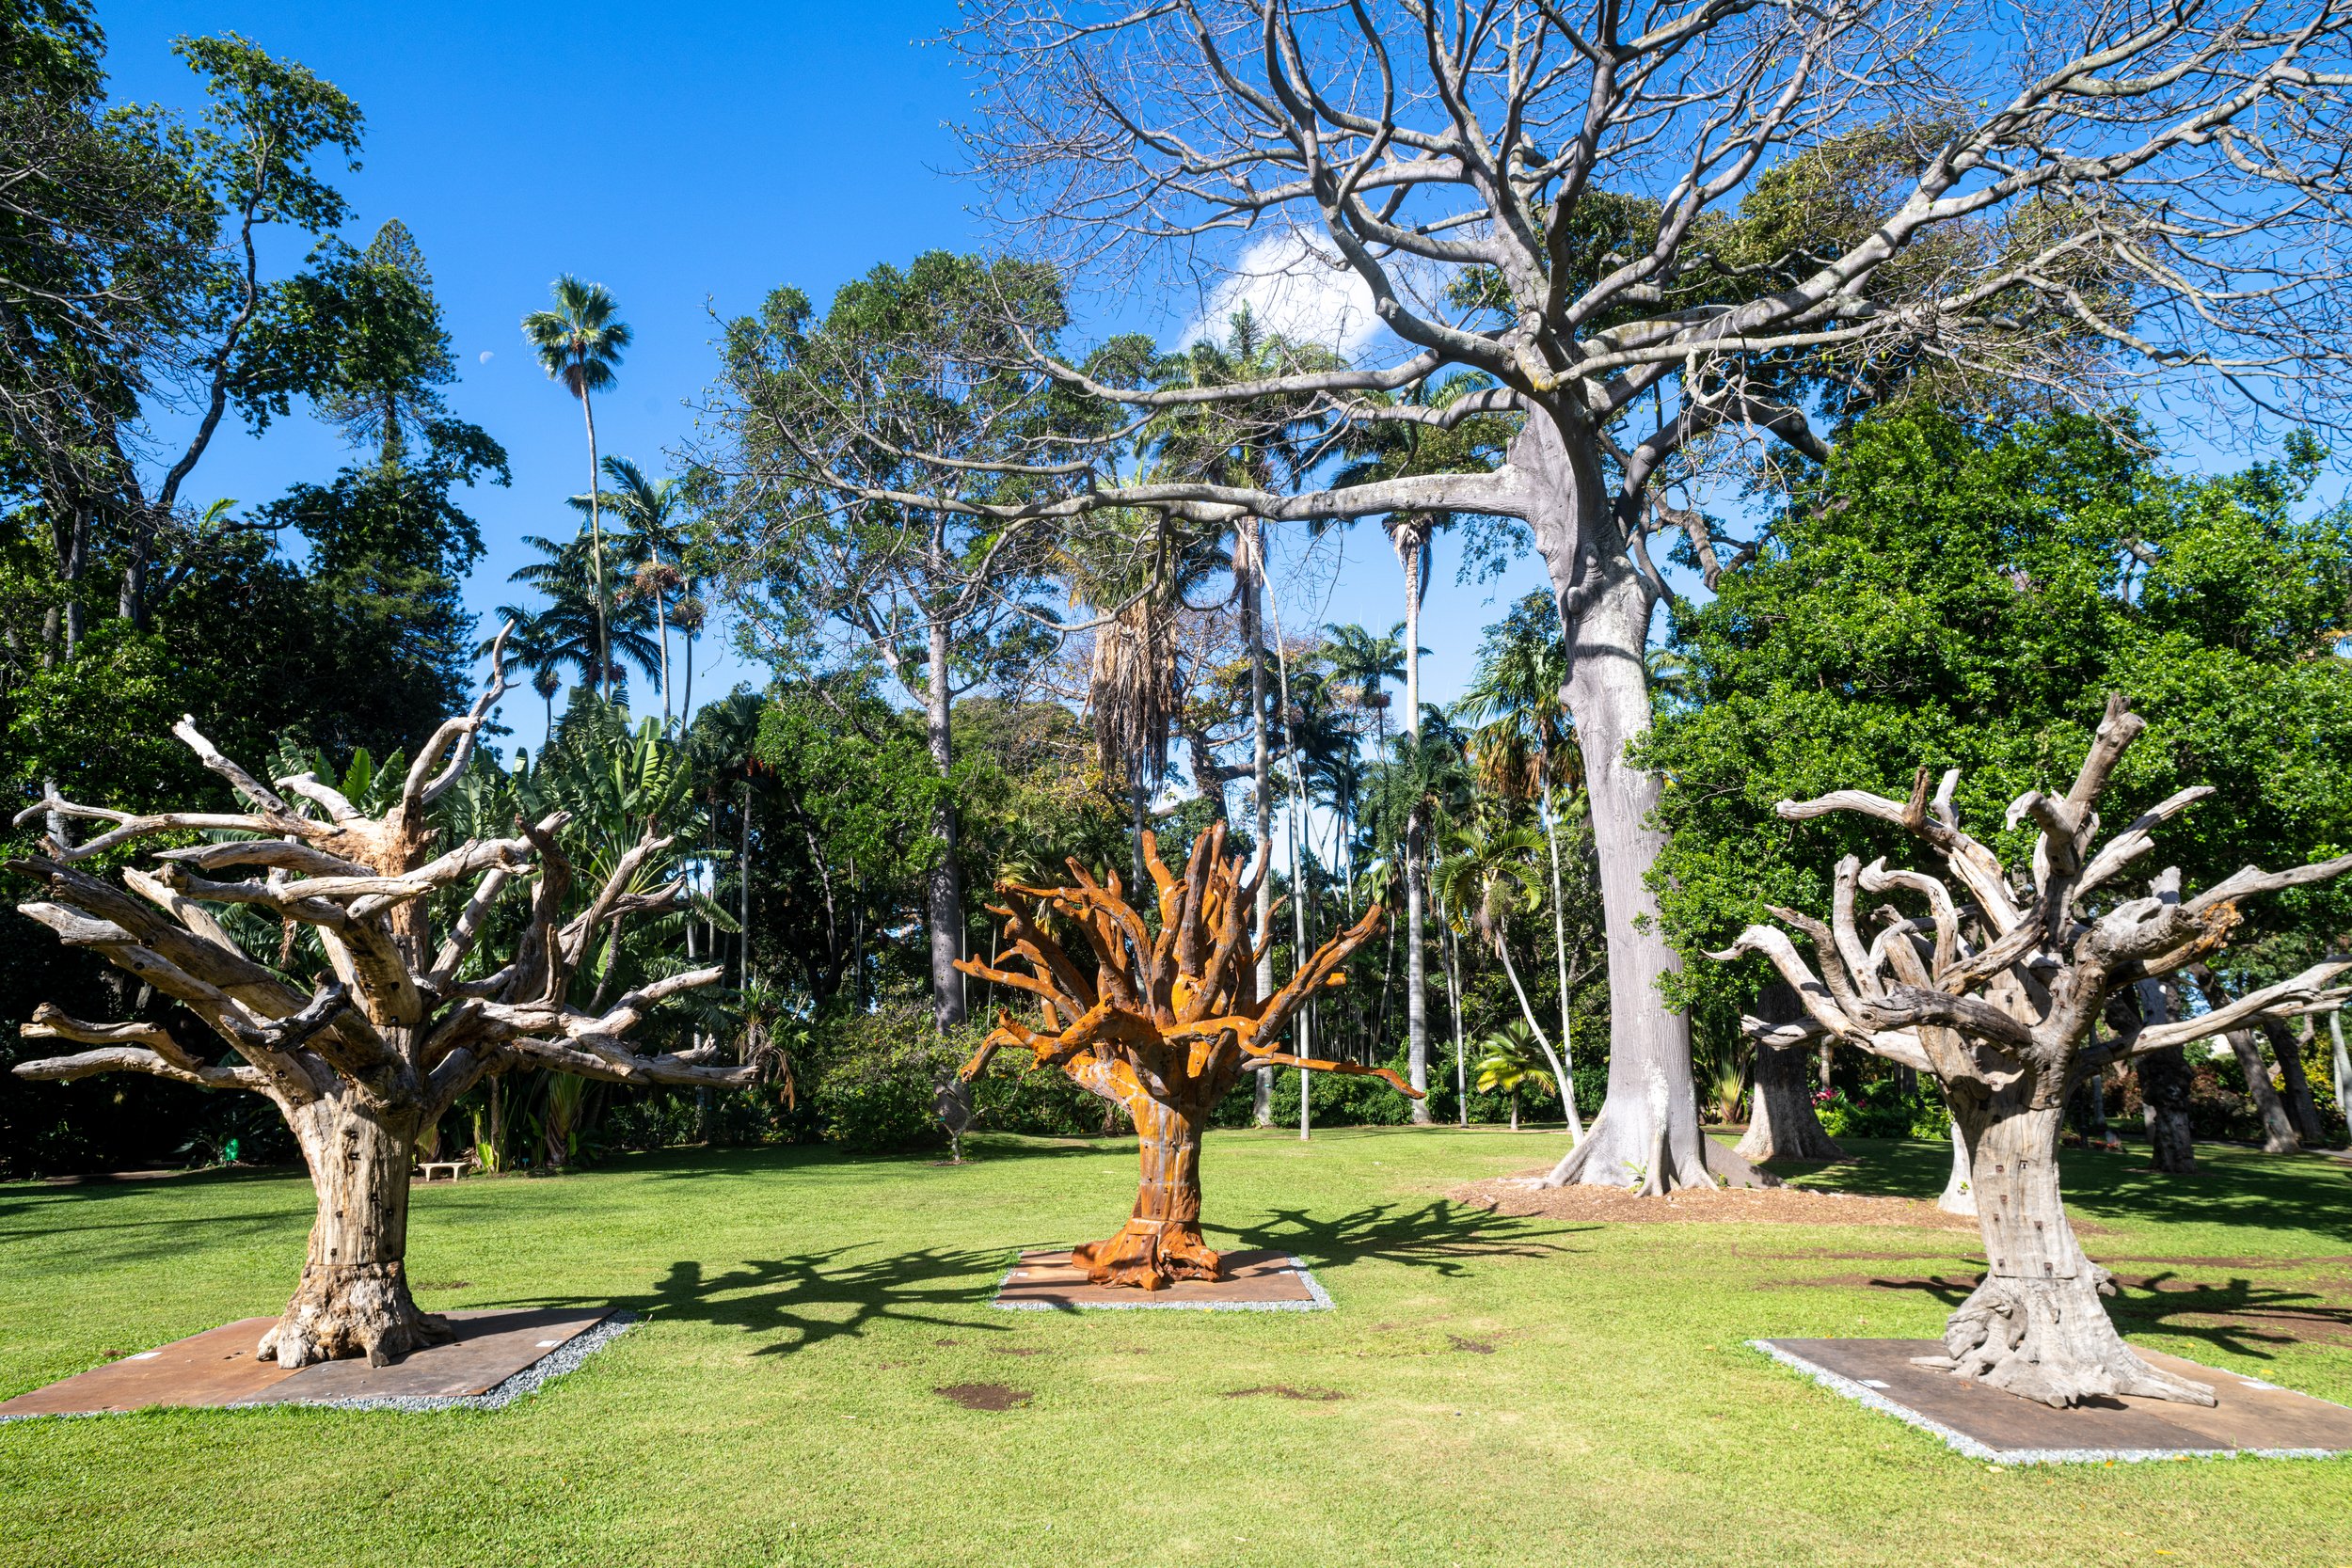  Installation view:  Ai Weiwei,   Tree  (2010),  Iron Tree  (2020),  Tree  (2010), Foster Botanical Garden, HT22, Honolulu. © Ai Weiwei Studio. Courtesy of the artist and Hawai‘i Contemporary. Photo: Christopher Rohrer.  